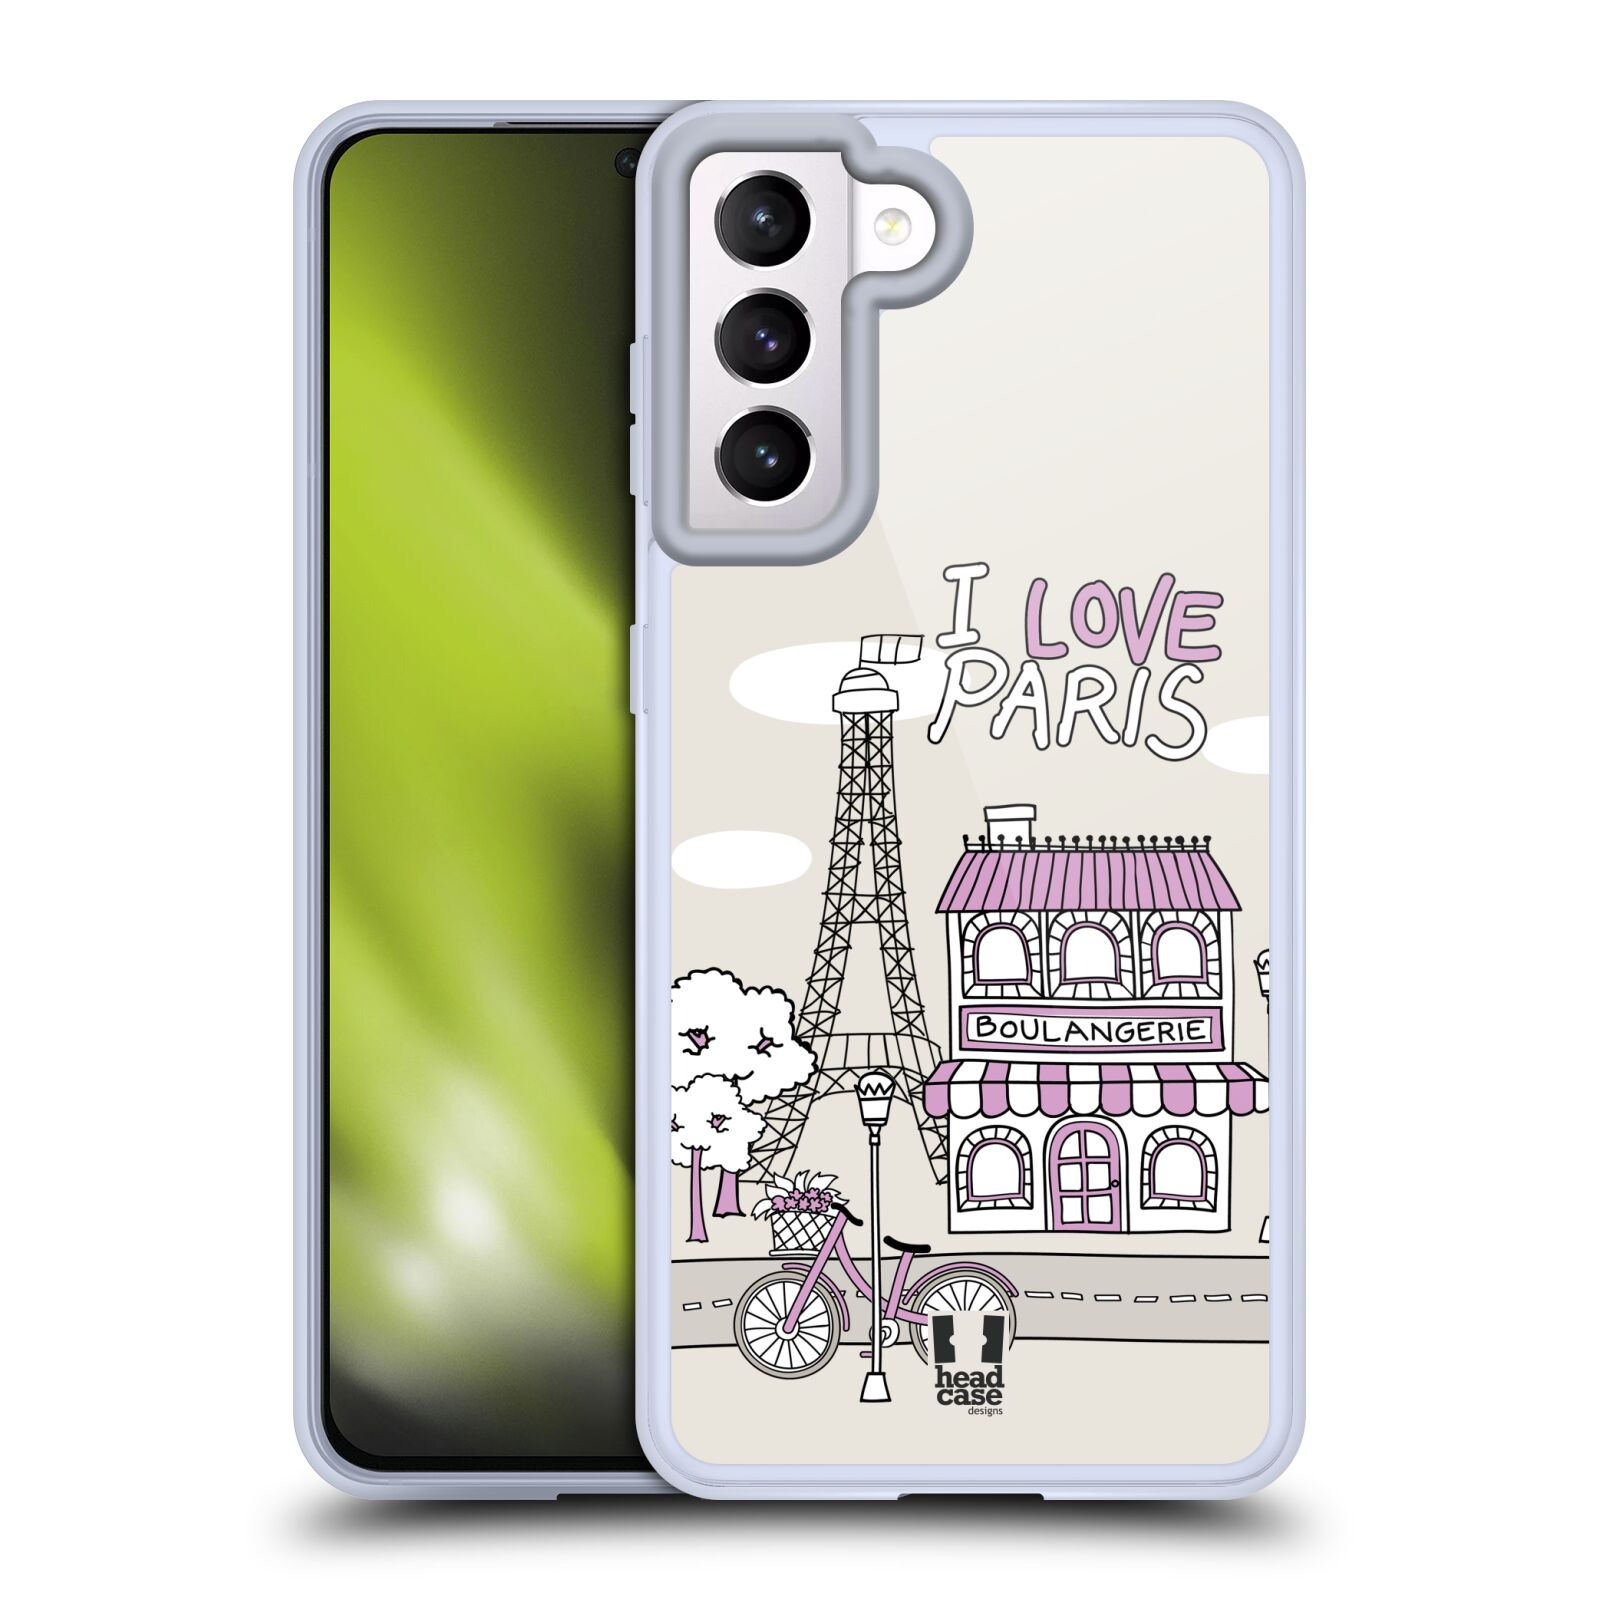 Plastový obal HEAD CASE na mobil Samsung Galaxy S21 5G vzor Kreslená městečka FIALOVÁ, Paříž, Francie, I LOVE PARIS